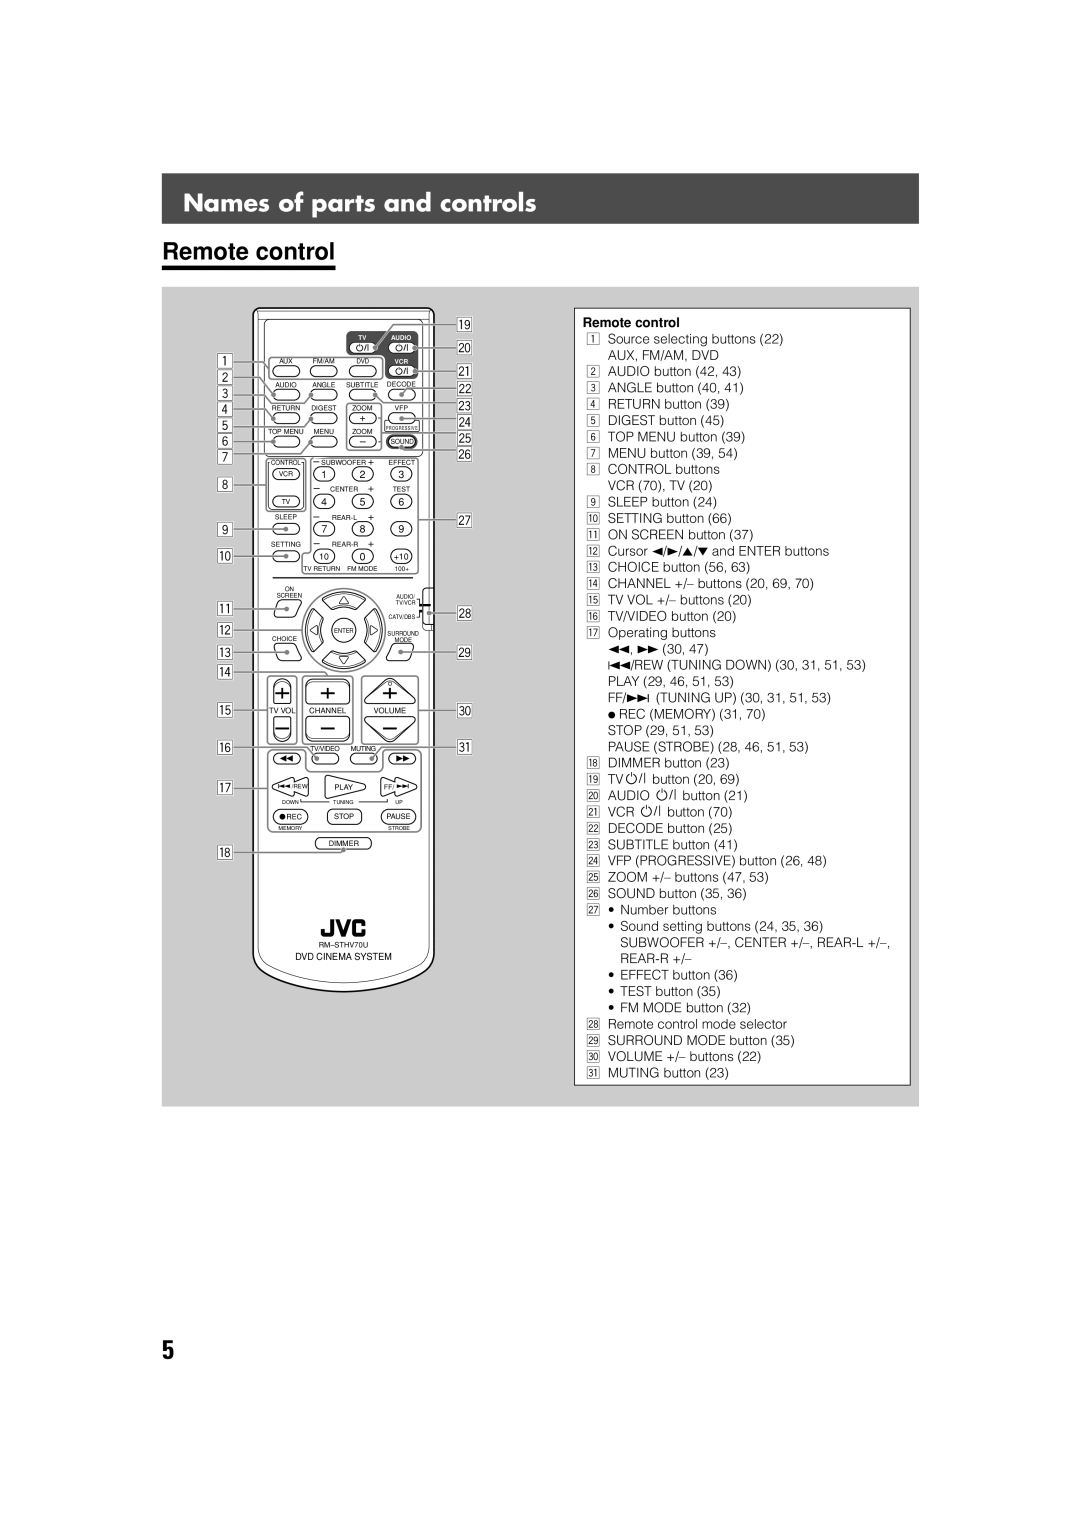 JVC SP-XSV70, SP-PWV70 manual Names of parts and controls, Remote control 